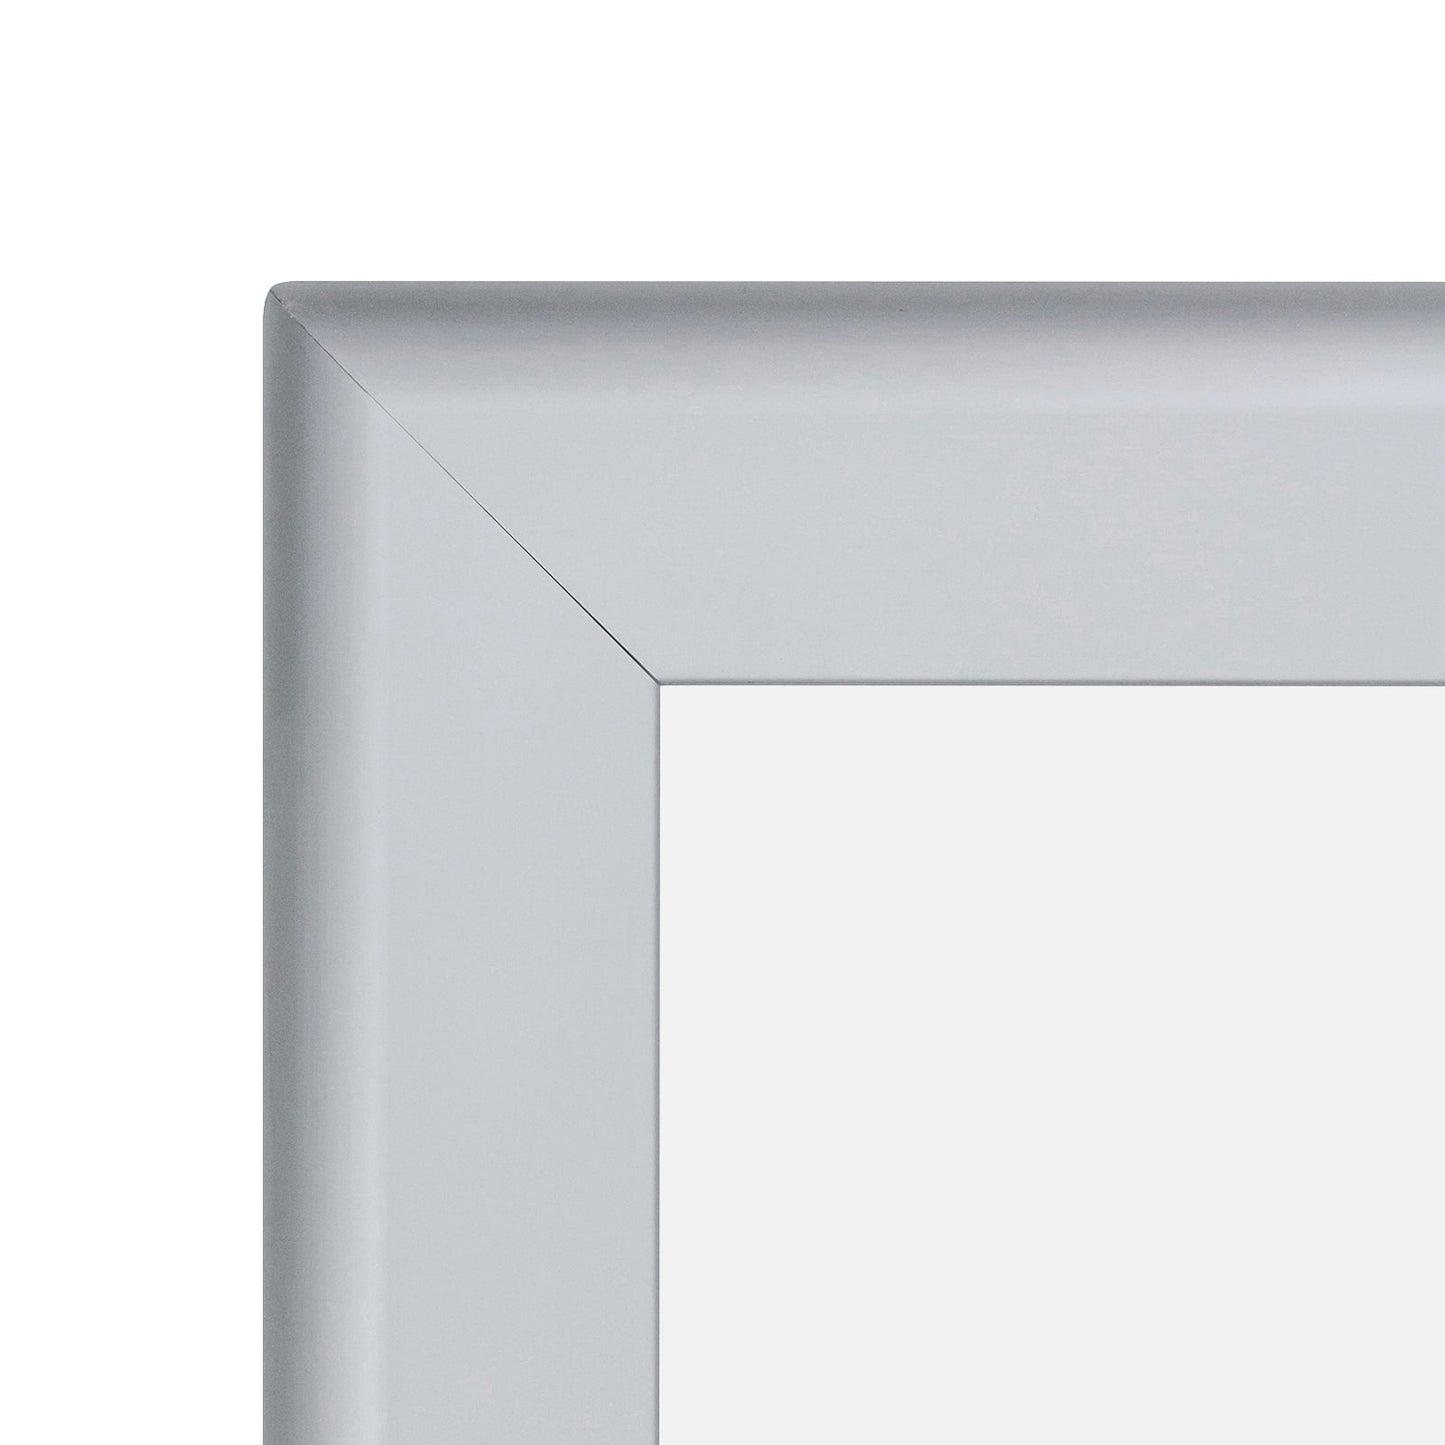 33x47 Silver SnapeZo® Snap Frame - 1.7" Profile - Snap Frames Direct